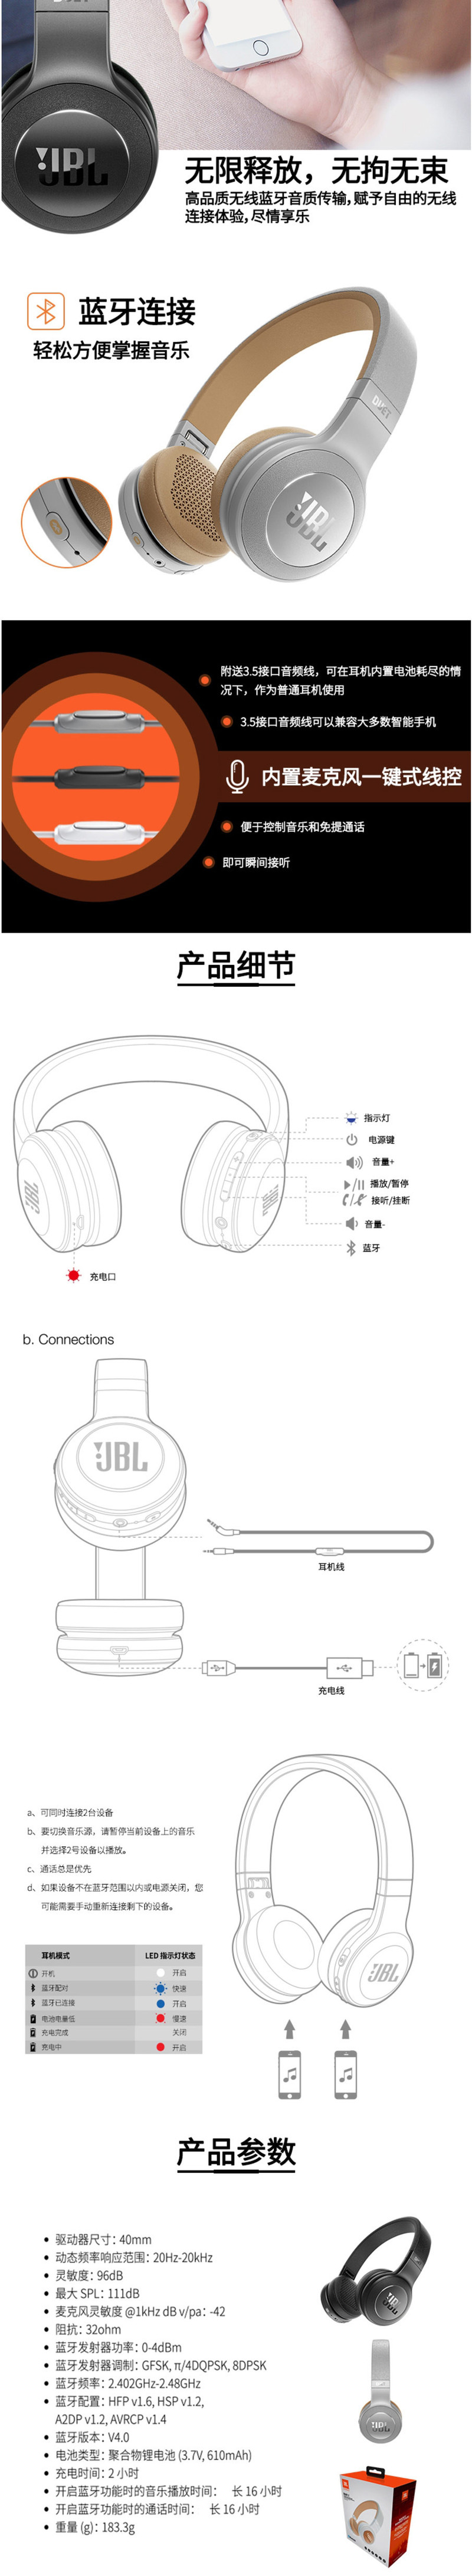 JBL Duet BT Wireless 头戴式无线耳机 蓝牙耳机头戴式 无线耳机